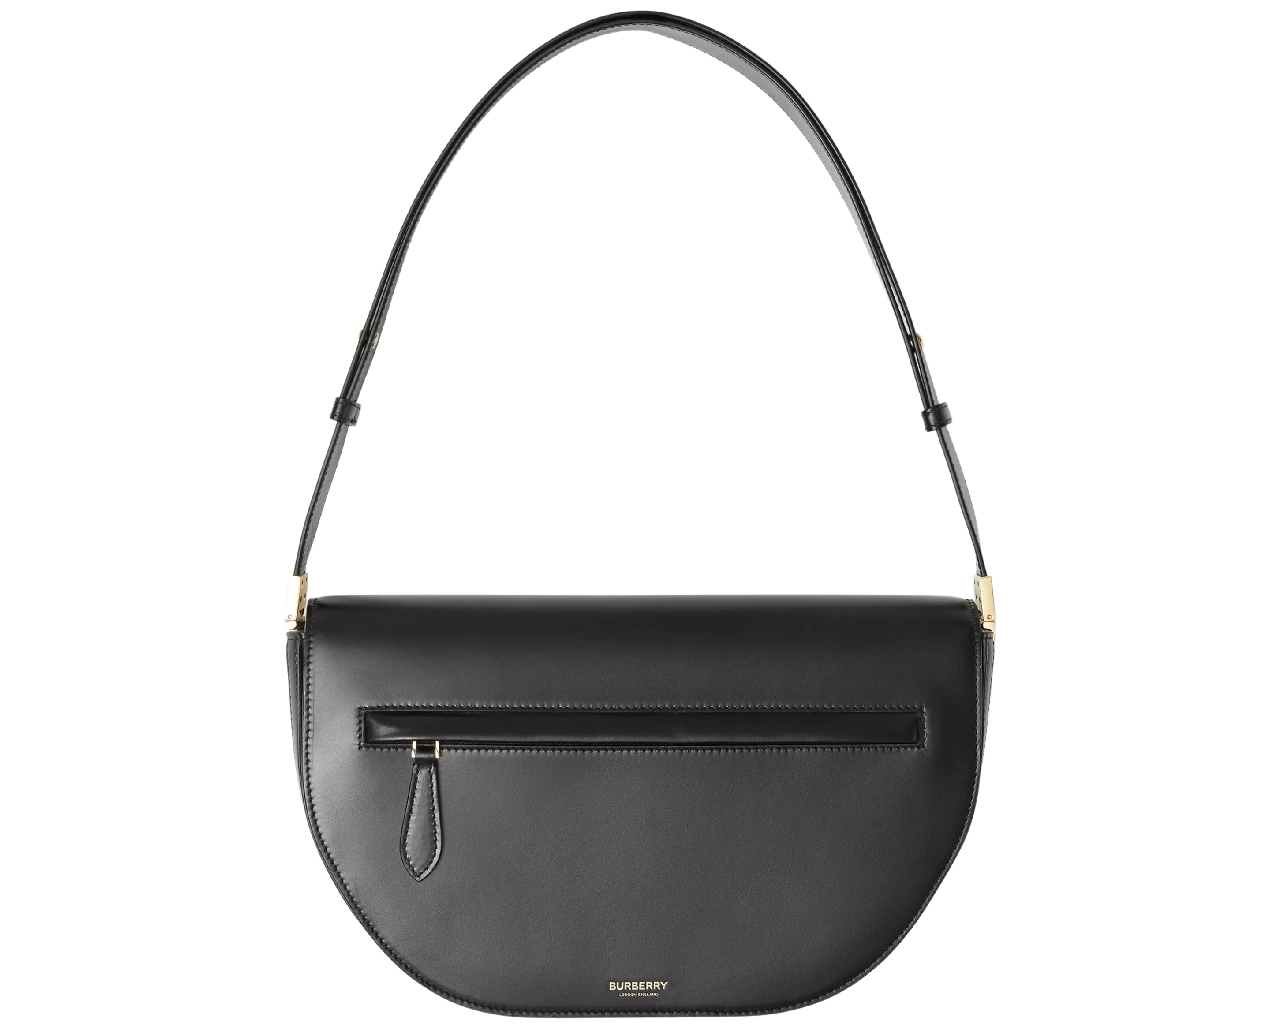 Introducing the New Burberry Olympia Handbag Campaign - Grazia